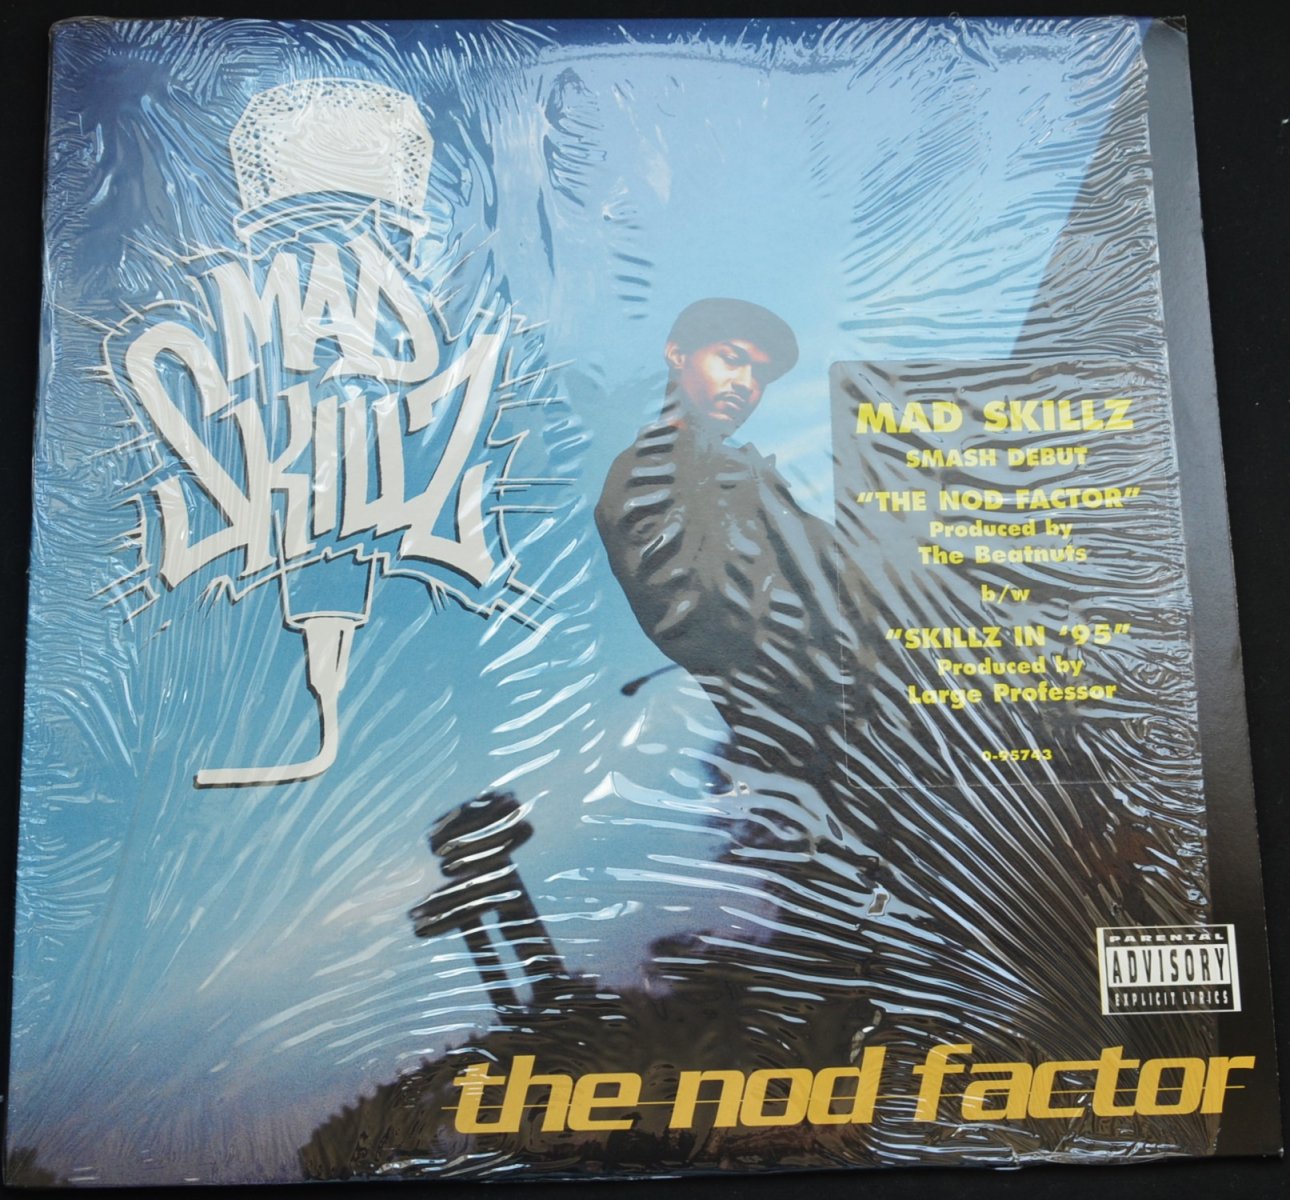 MAD SKILLZ / THE NOD FACTOR / SKILLZ IN '95 (12